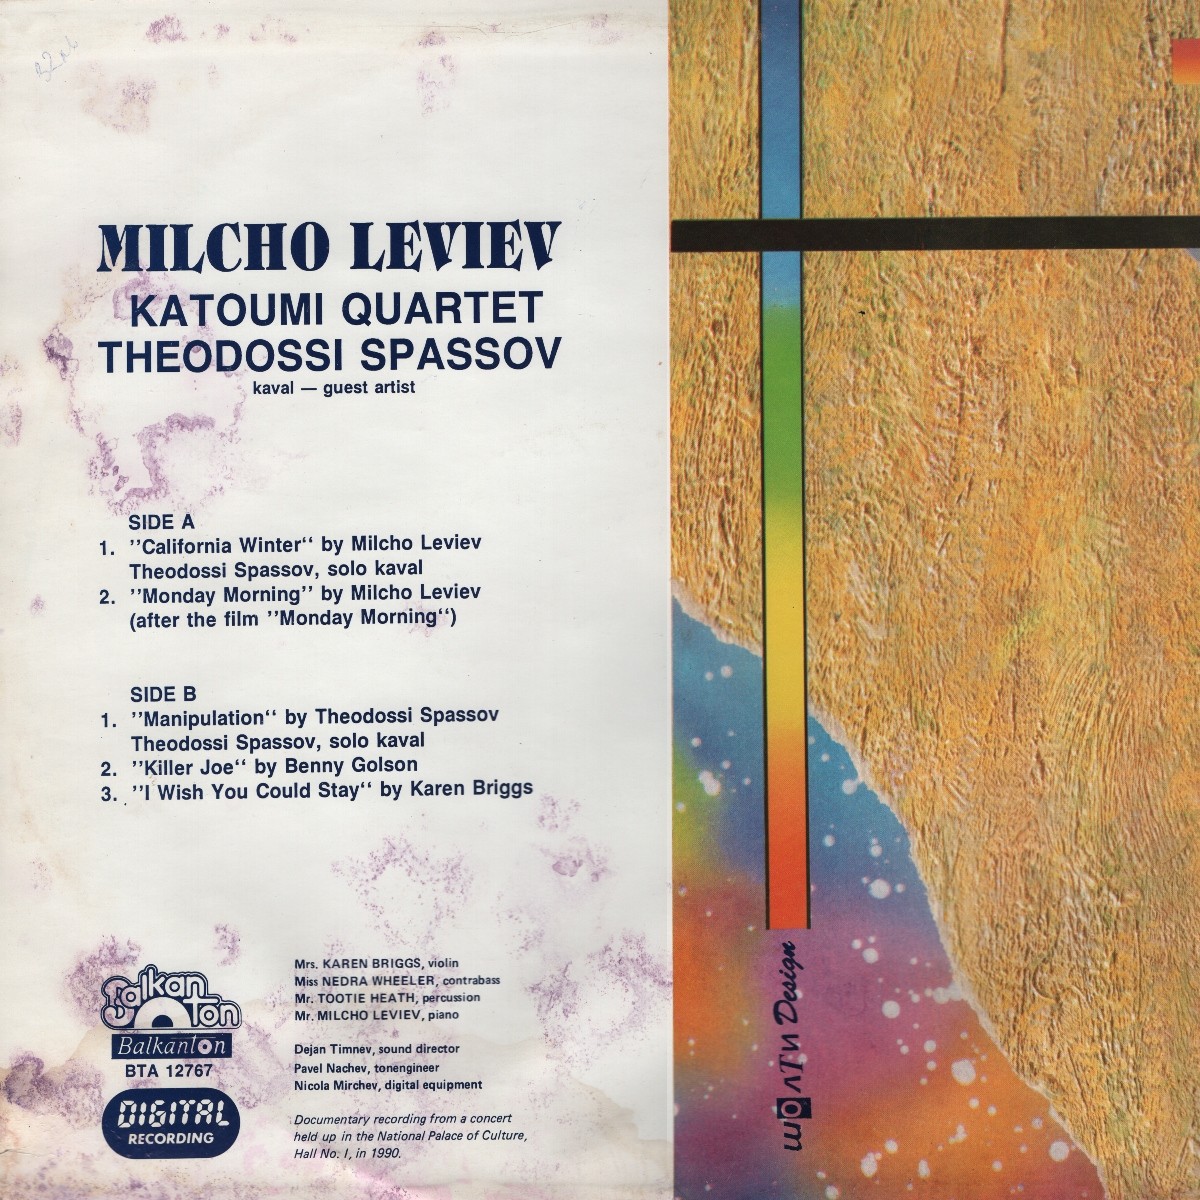 Milcho Leviev and "Katoumi" quartet